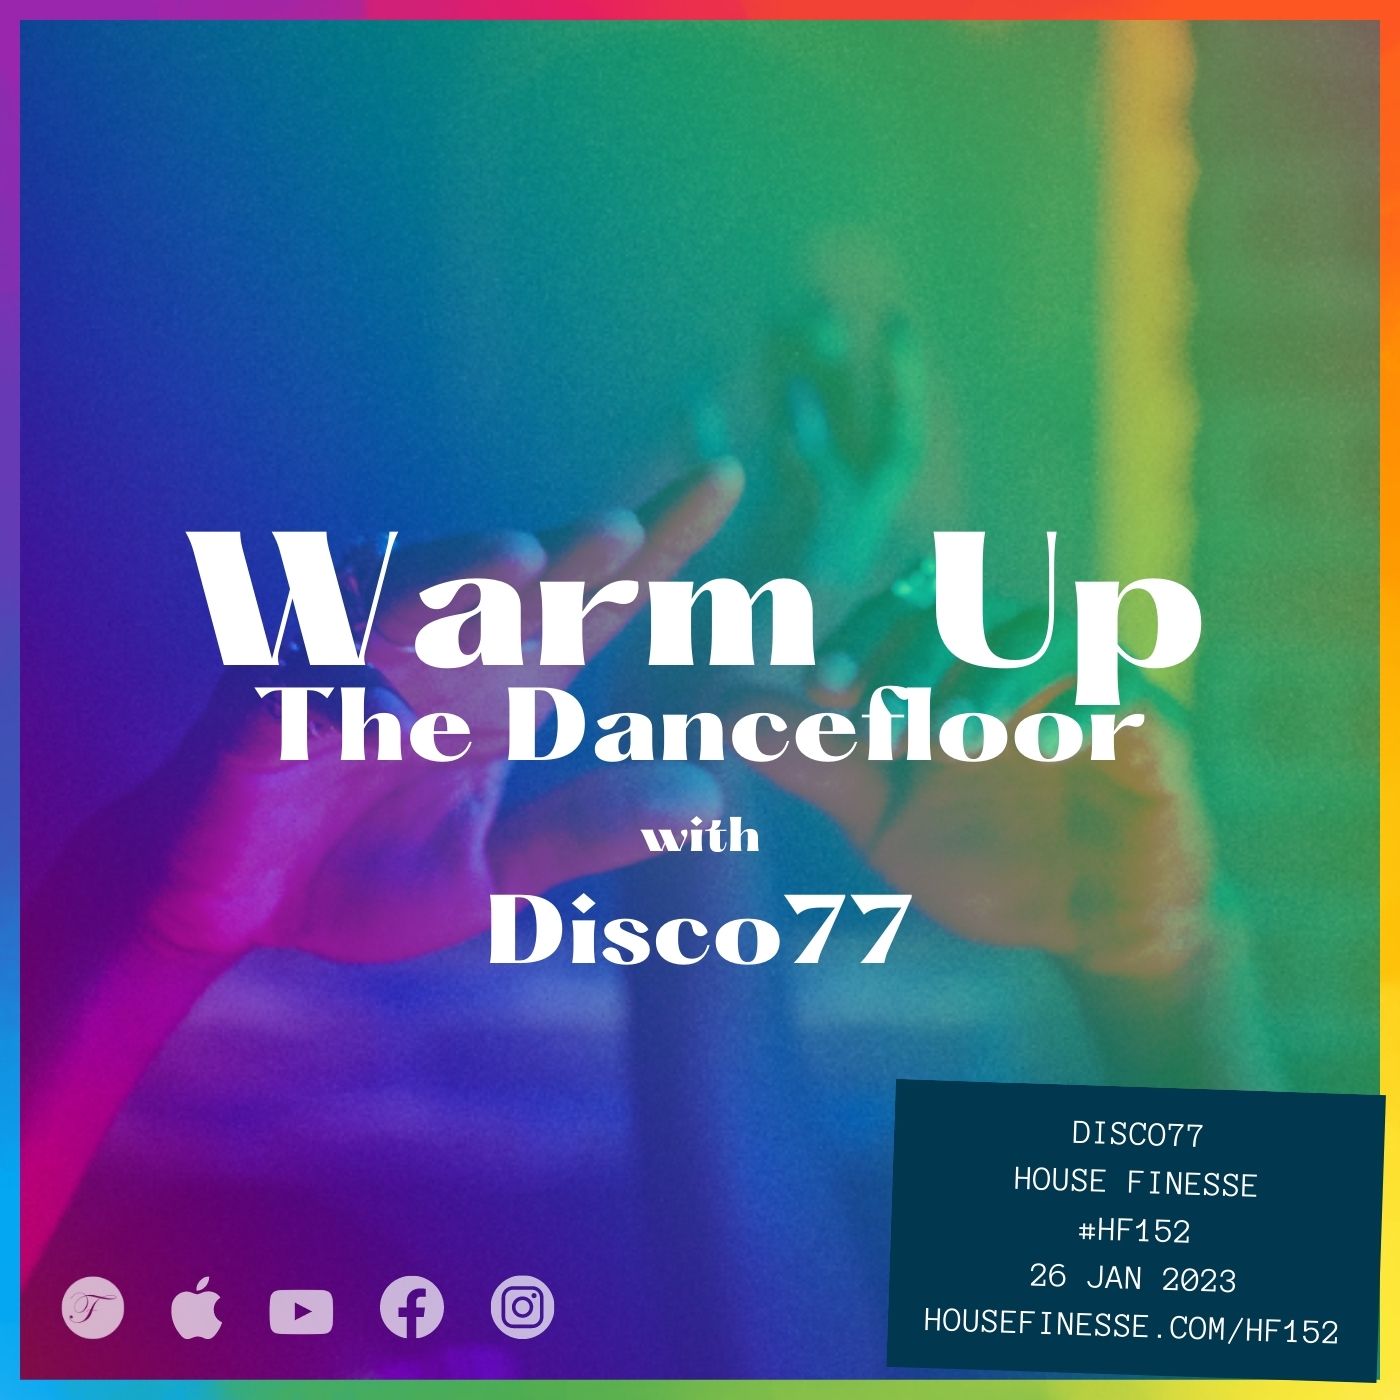 Warm Up The Dancefloor with Disco77